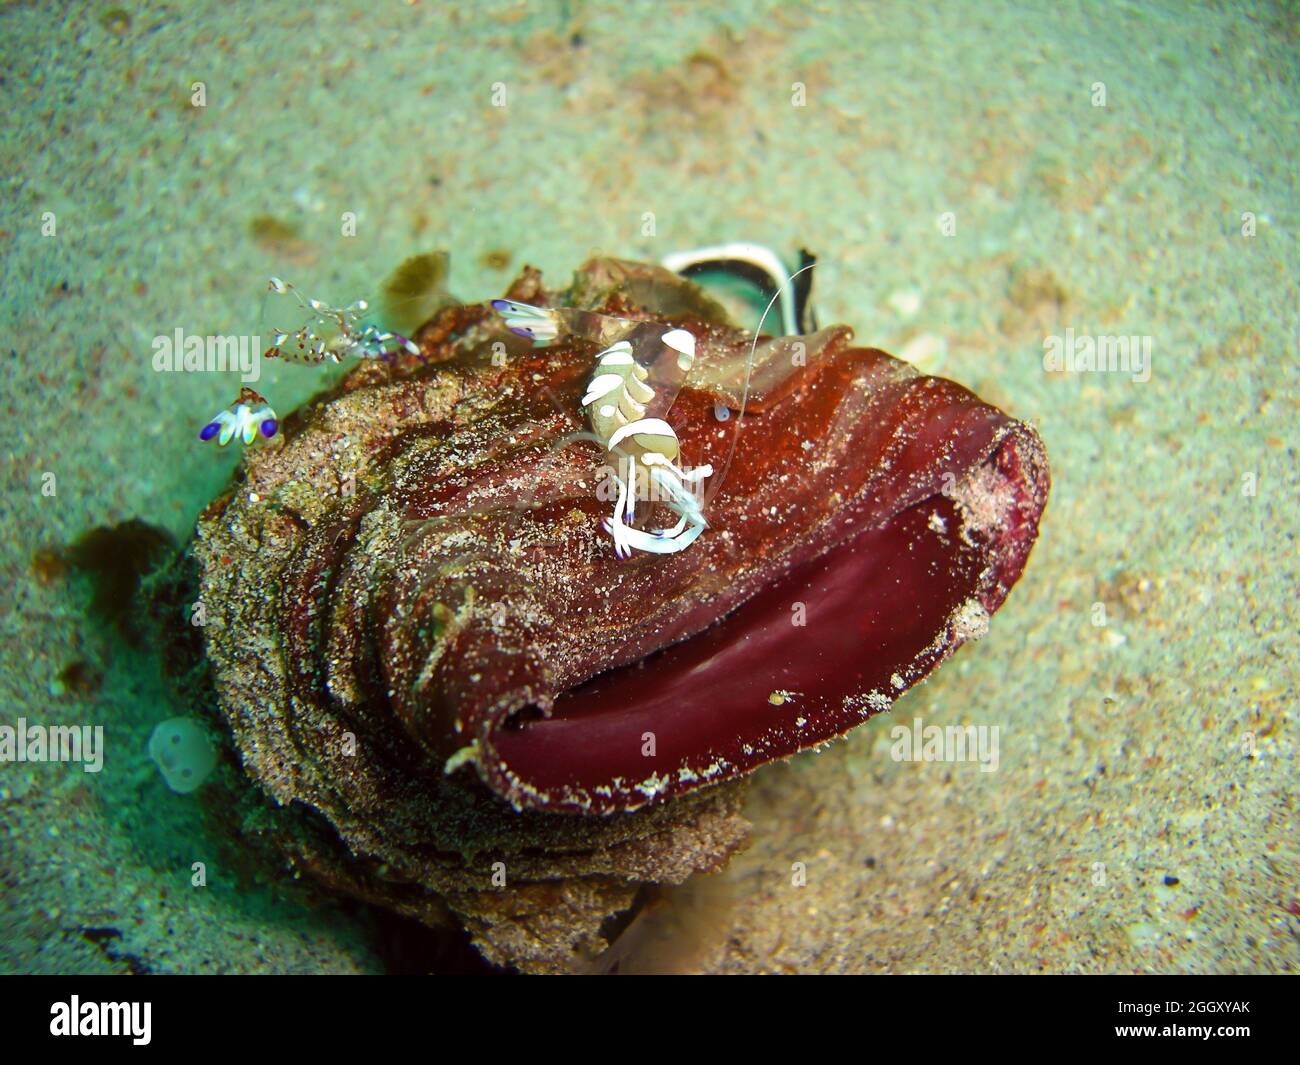 Anemone Shrimp on the ground in the filipino sea 6.2.2012 Stock Photo